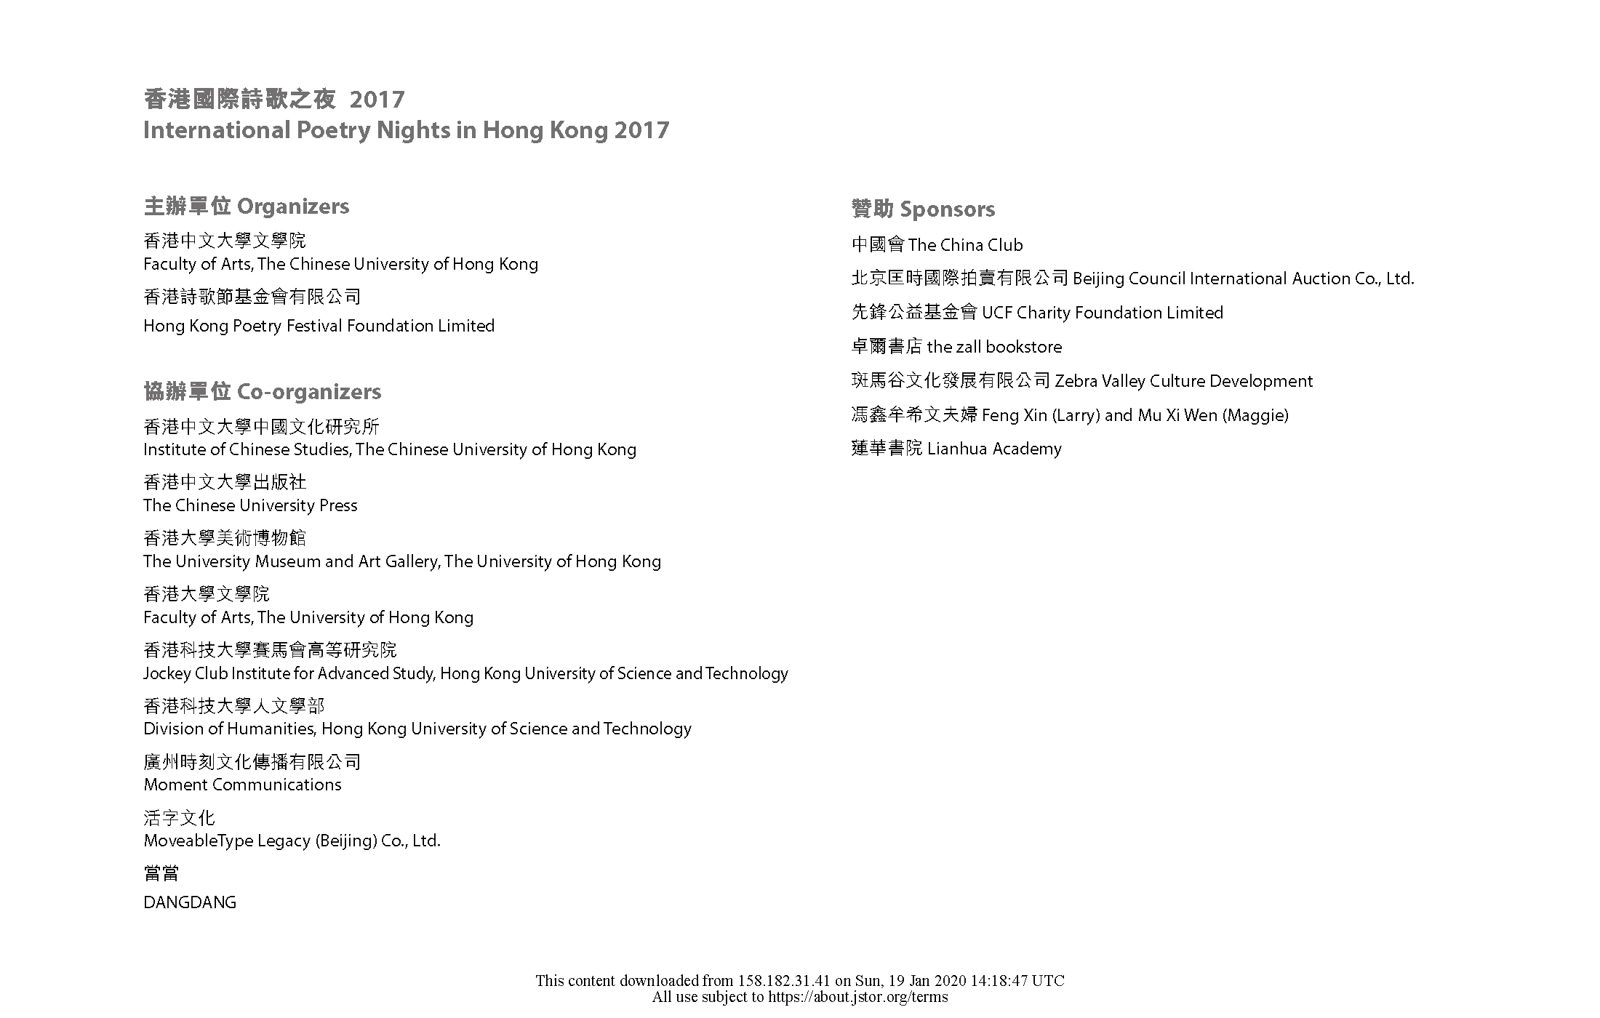 International Poetry Nights in Hong Kong 2017: Anthology